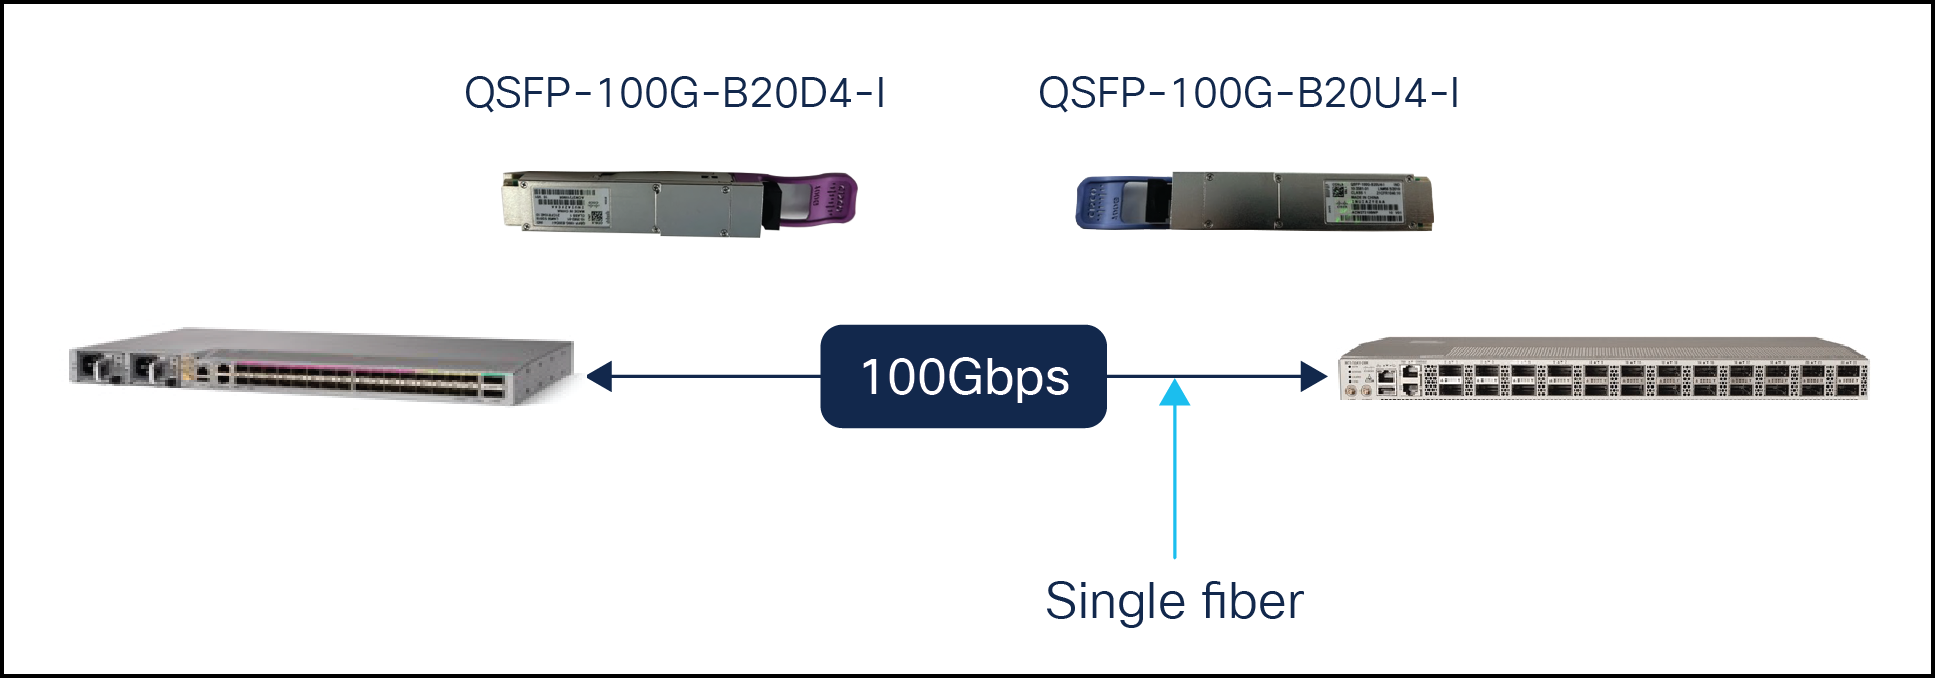 QSFP-100G-B20U4-I and QSFP-100G-B20D4-I provide 100Gbps, full-duplex 20km connectivity on a SMF